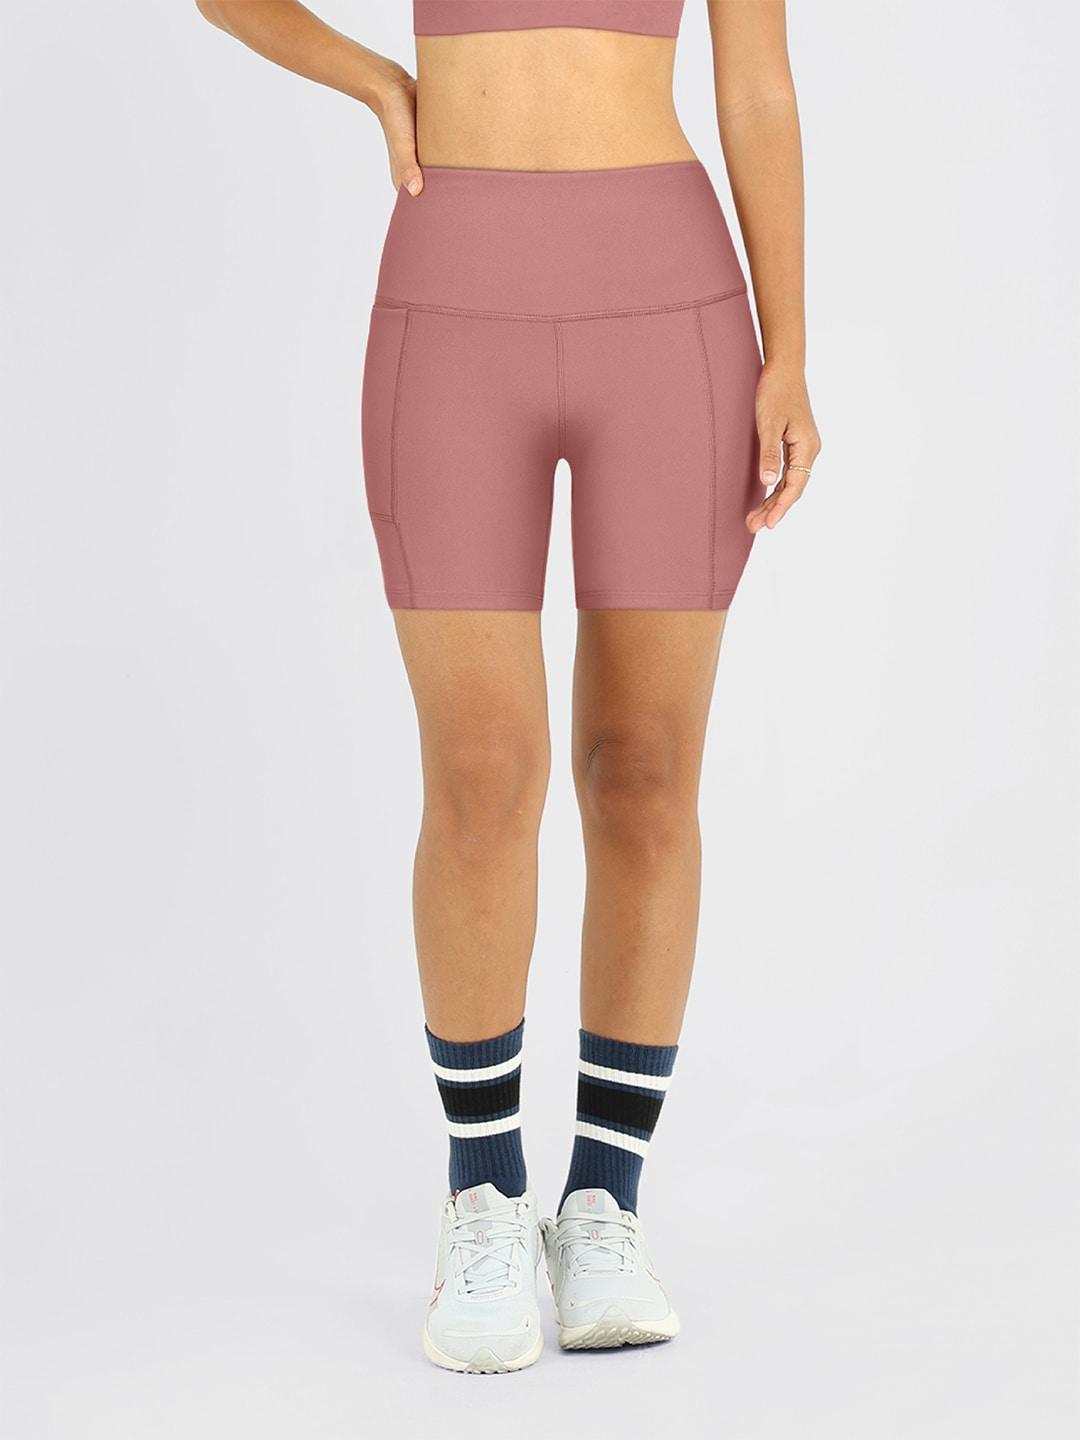 blissclub-women-skinny-fit-high-rise-sports-shorts